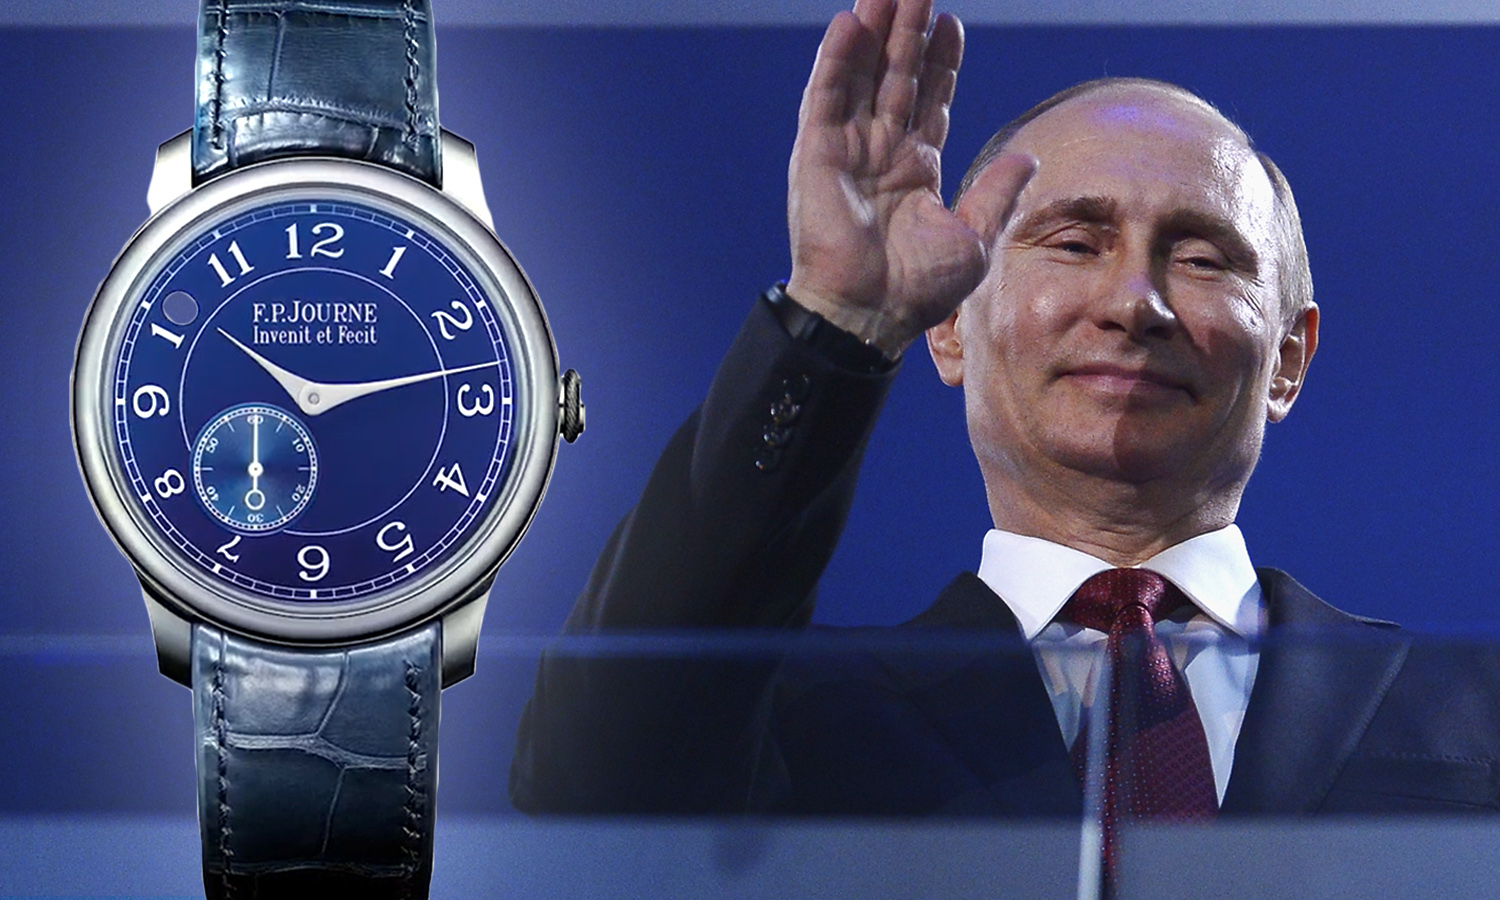 Часы Путина Blancpain Aqualung